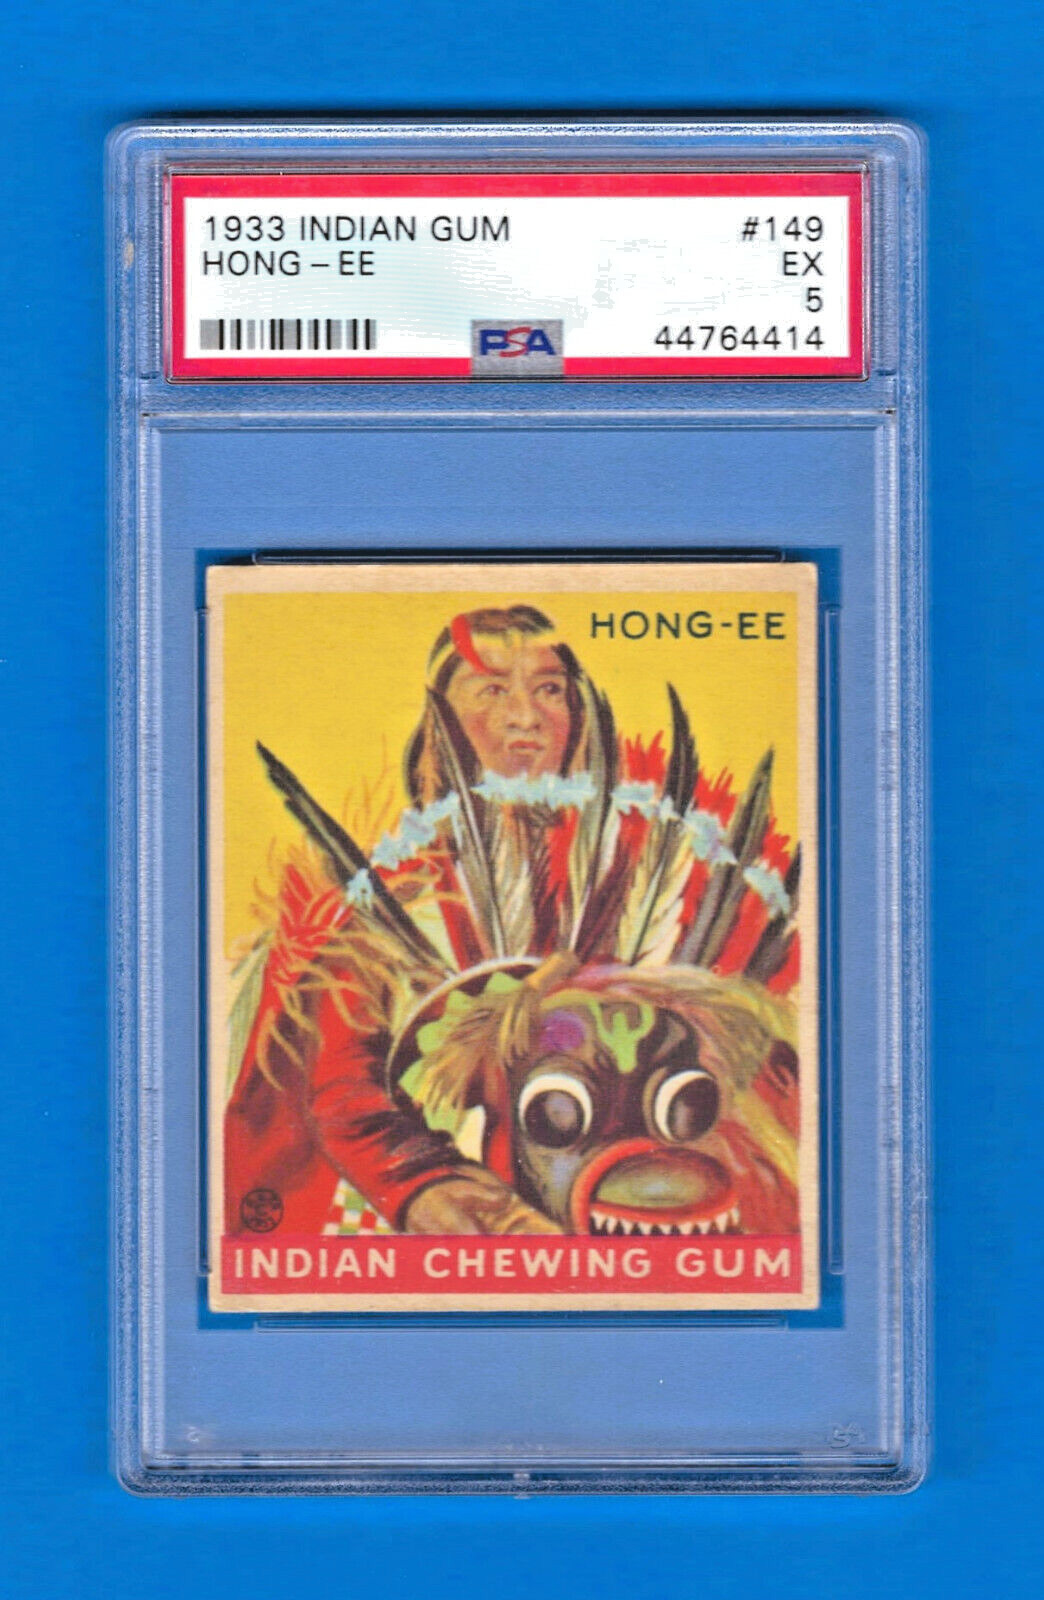 1933 R73 Goudey Indian Gum Card  #149 - HONG-EE - Series 216 - PSA 5 - EX